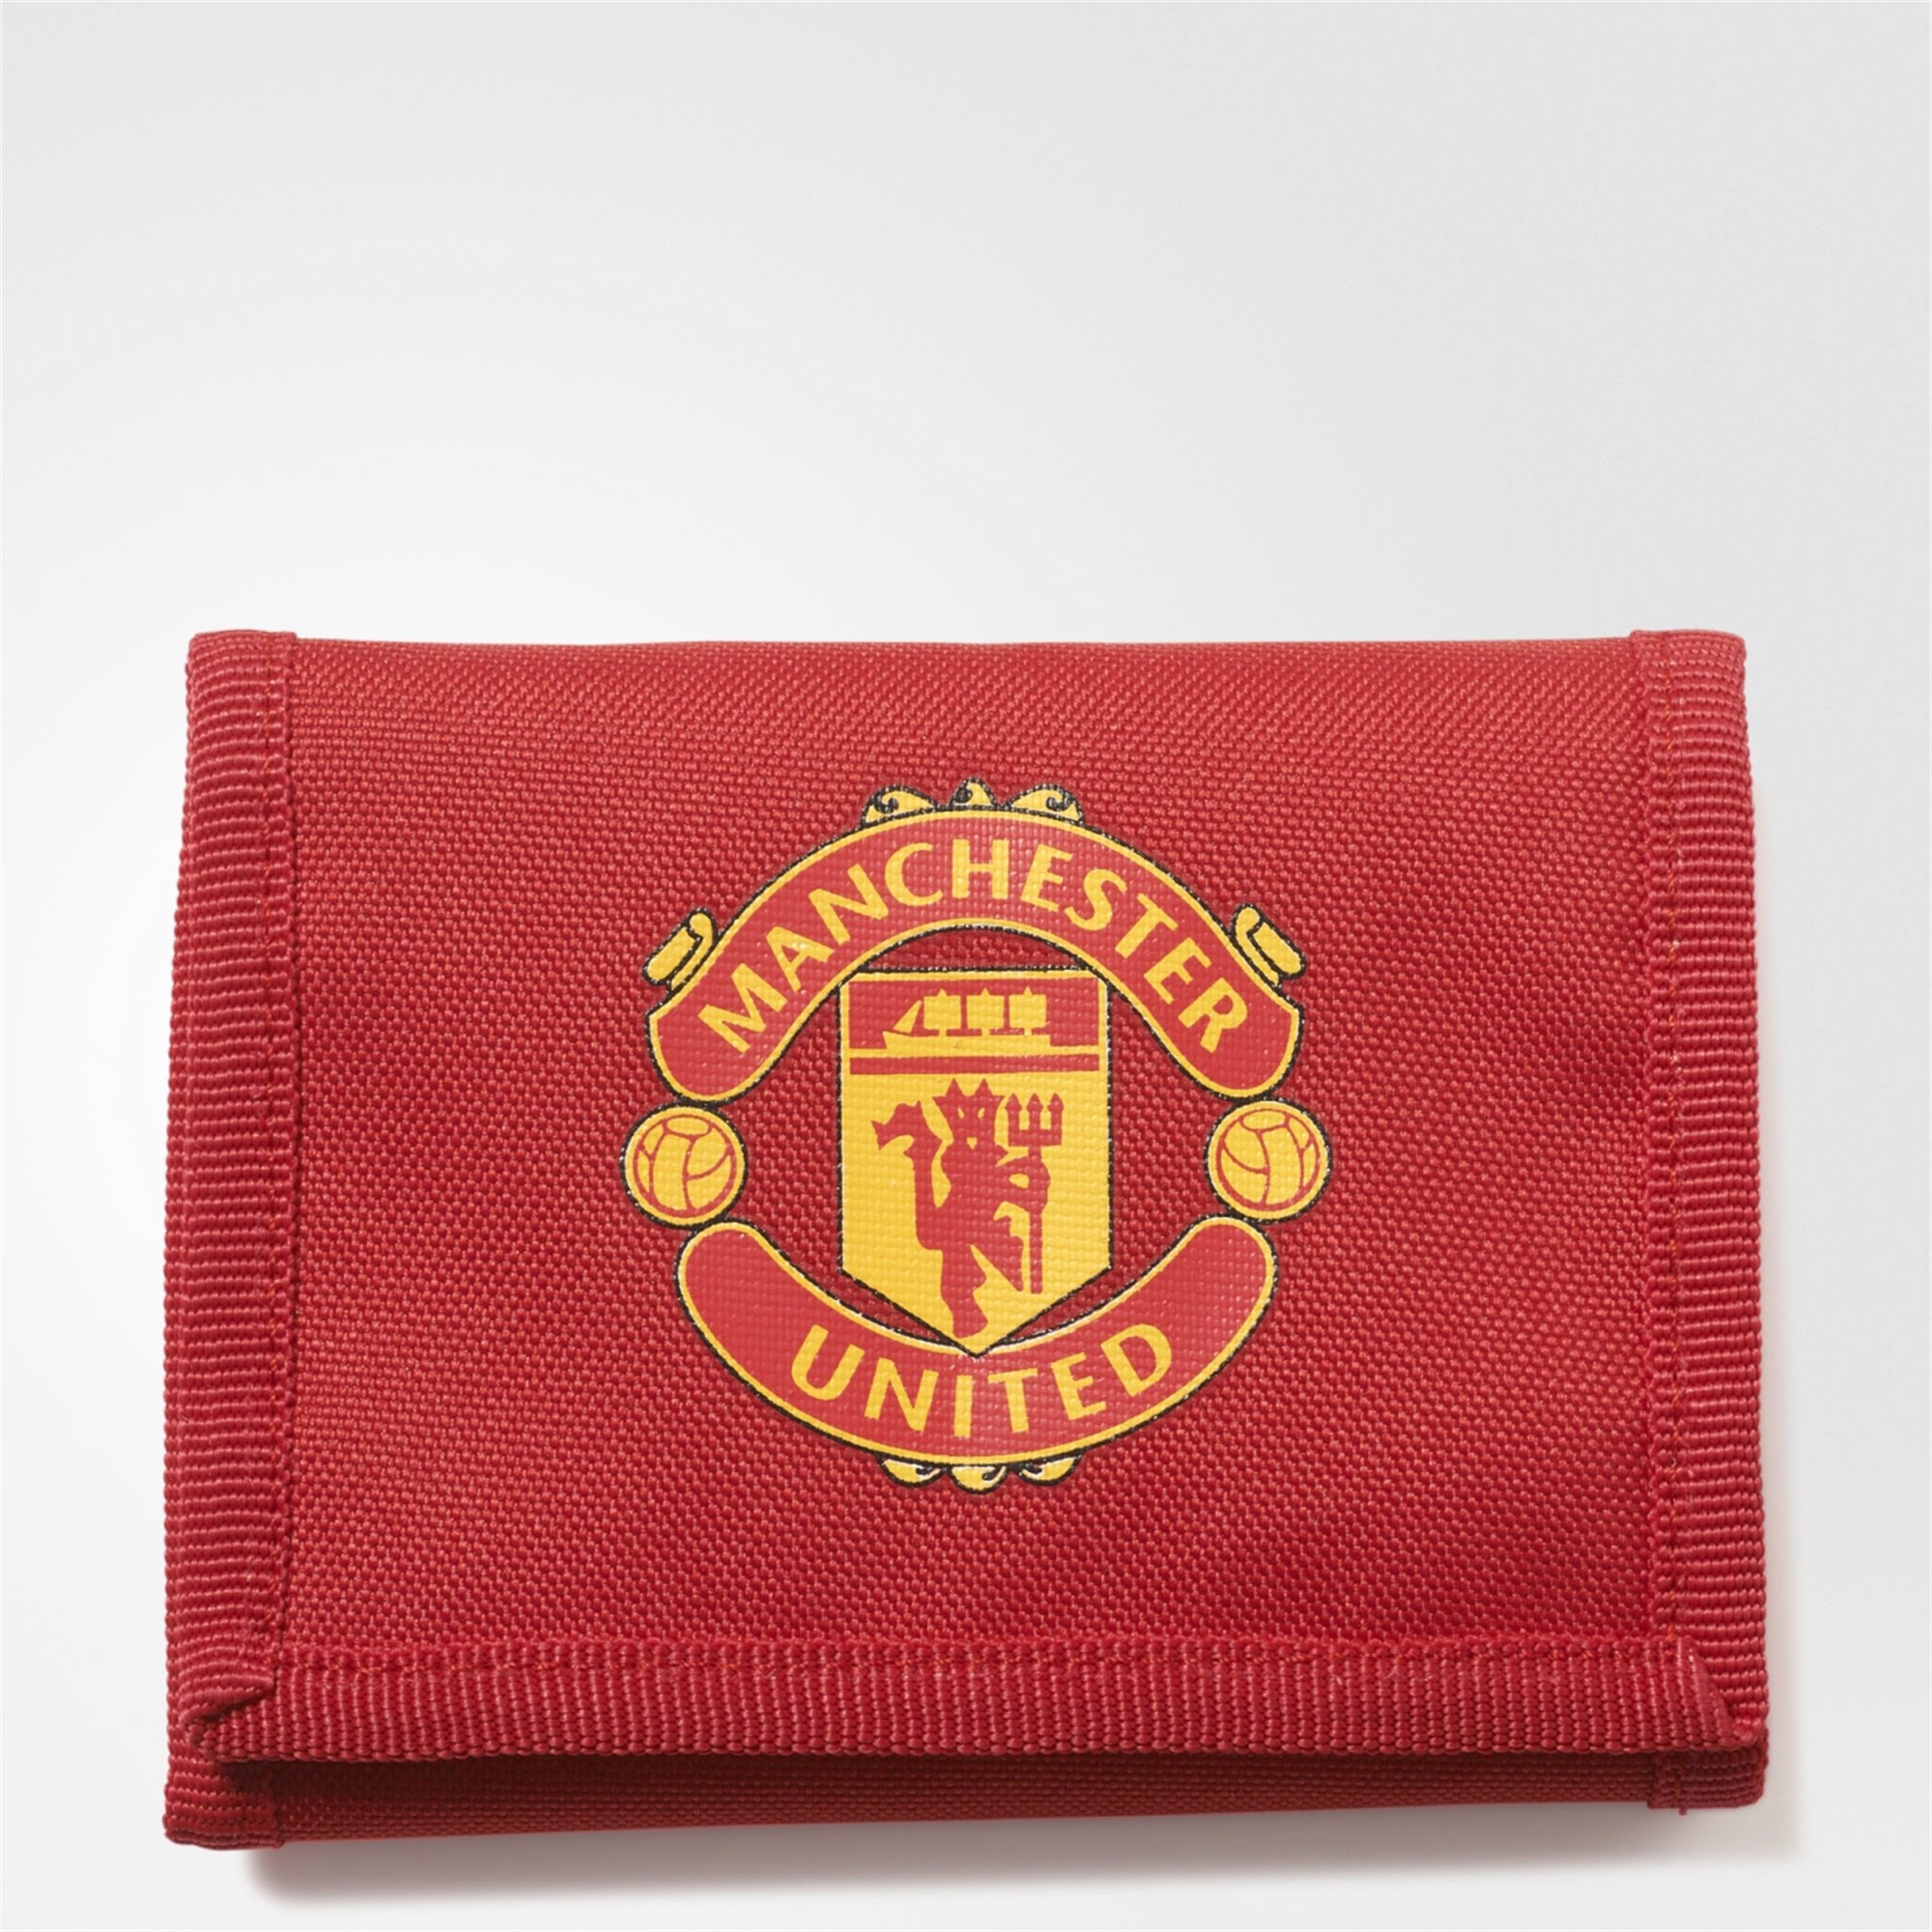 adidas Manchester United FC Wallet Cüzdan Ürün kodu: S95105 | Etichet Sport